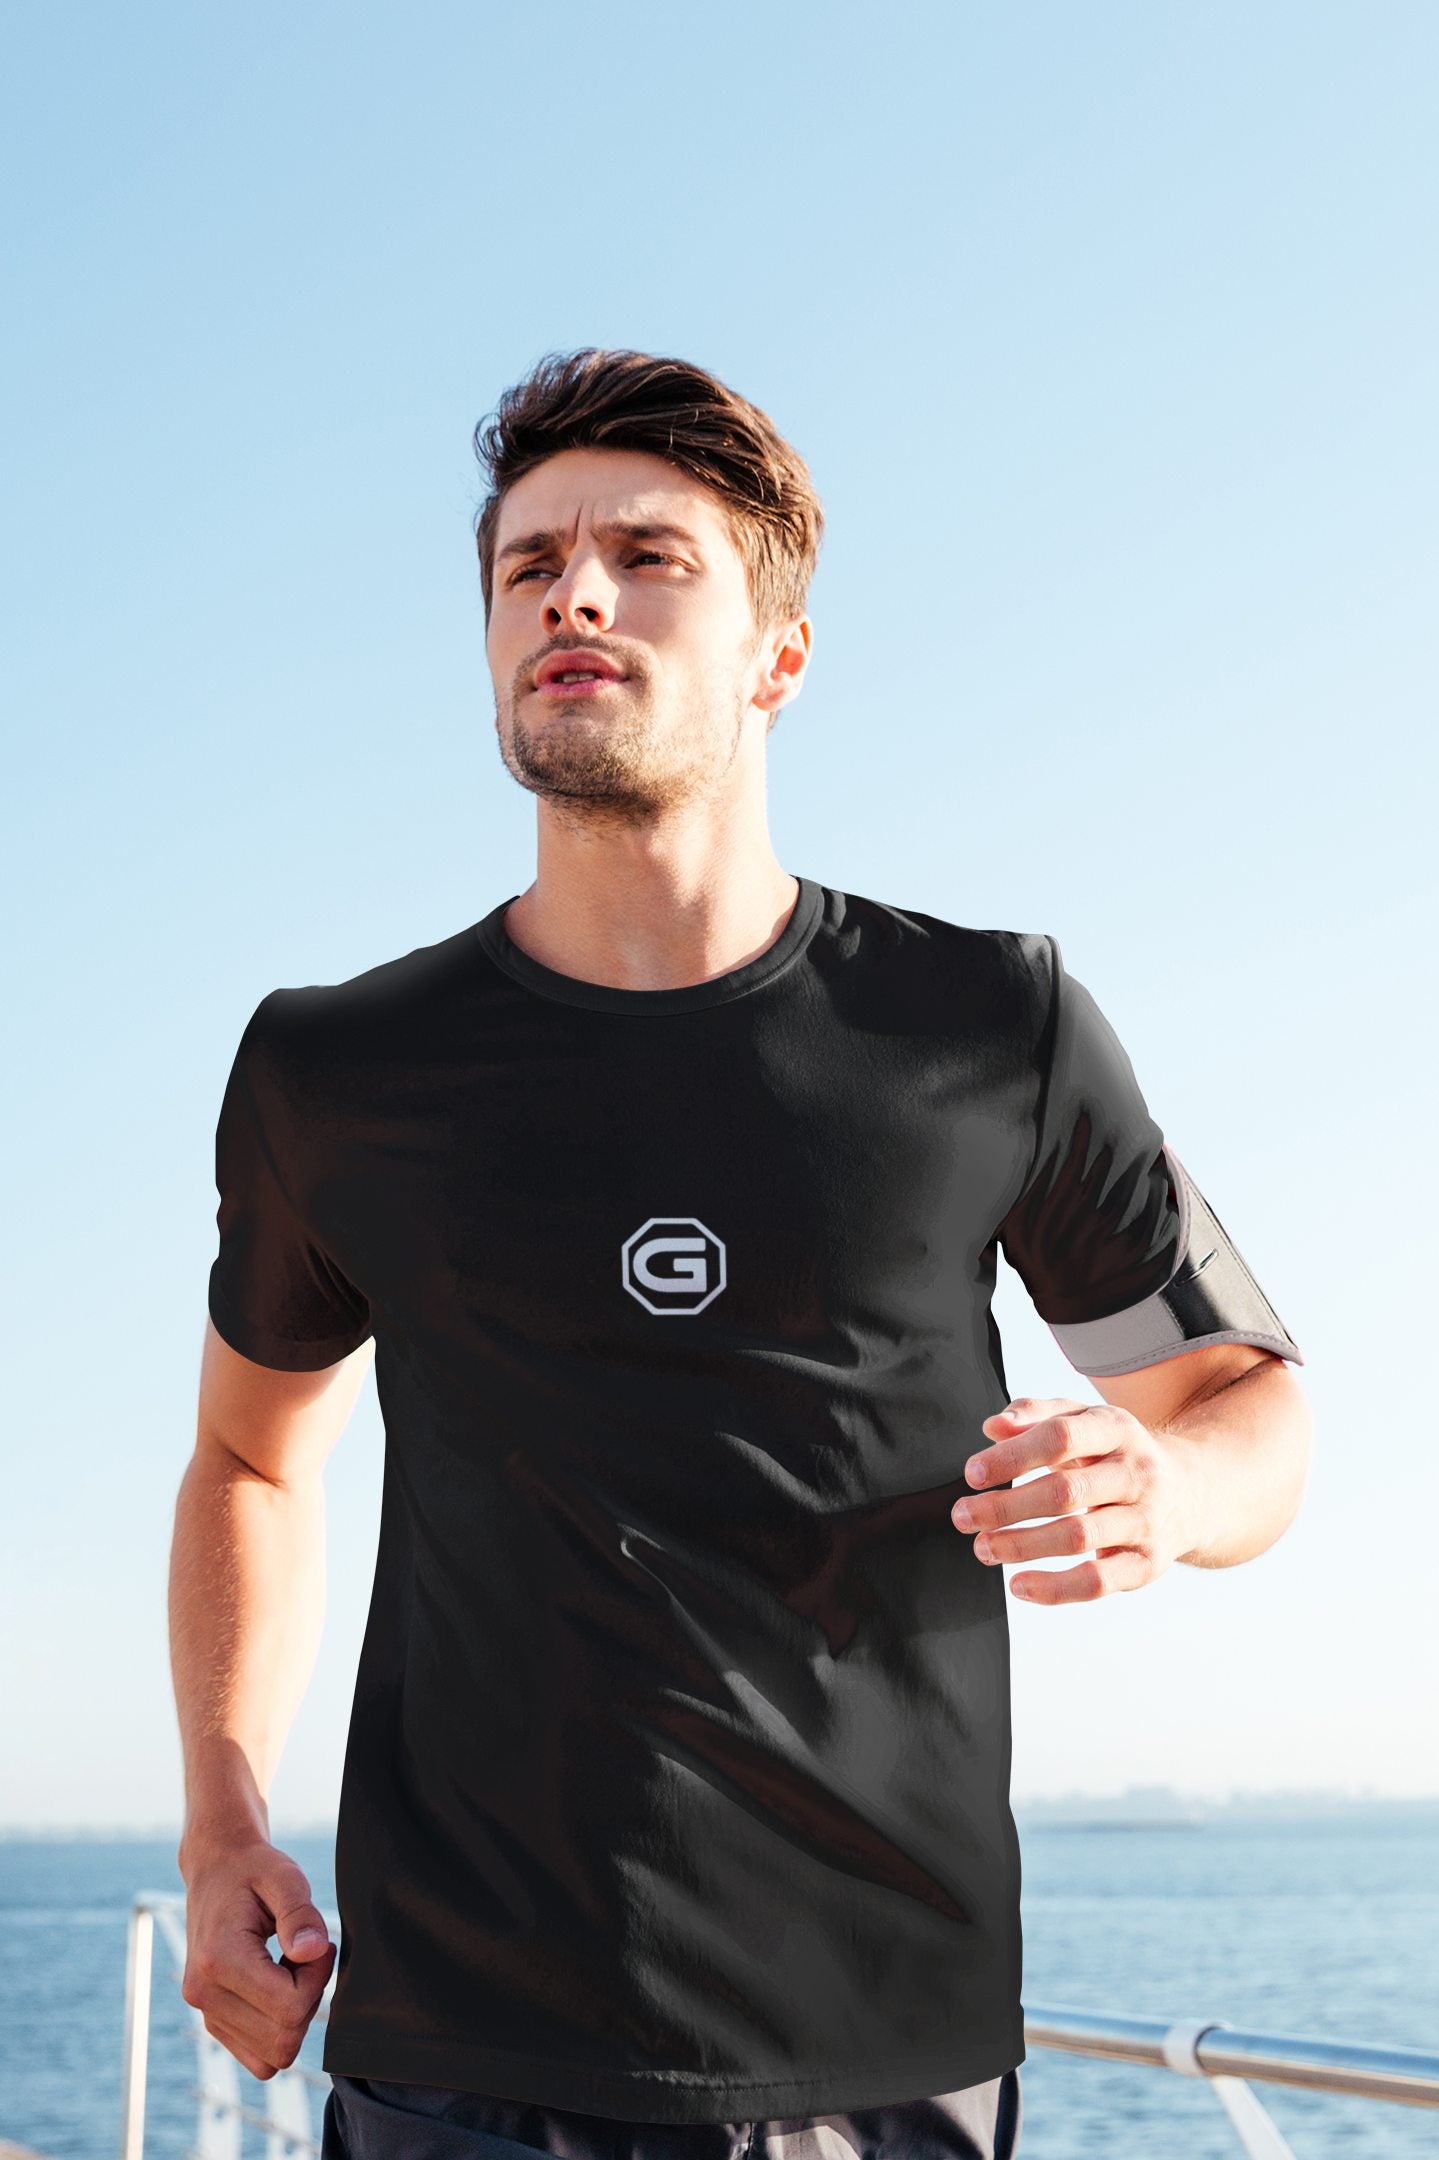 Stylish T shirts for men Active / Leisure Wear | Gymate Large G logo black